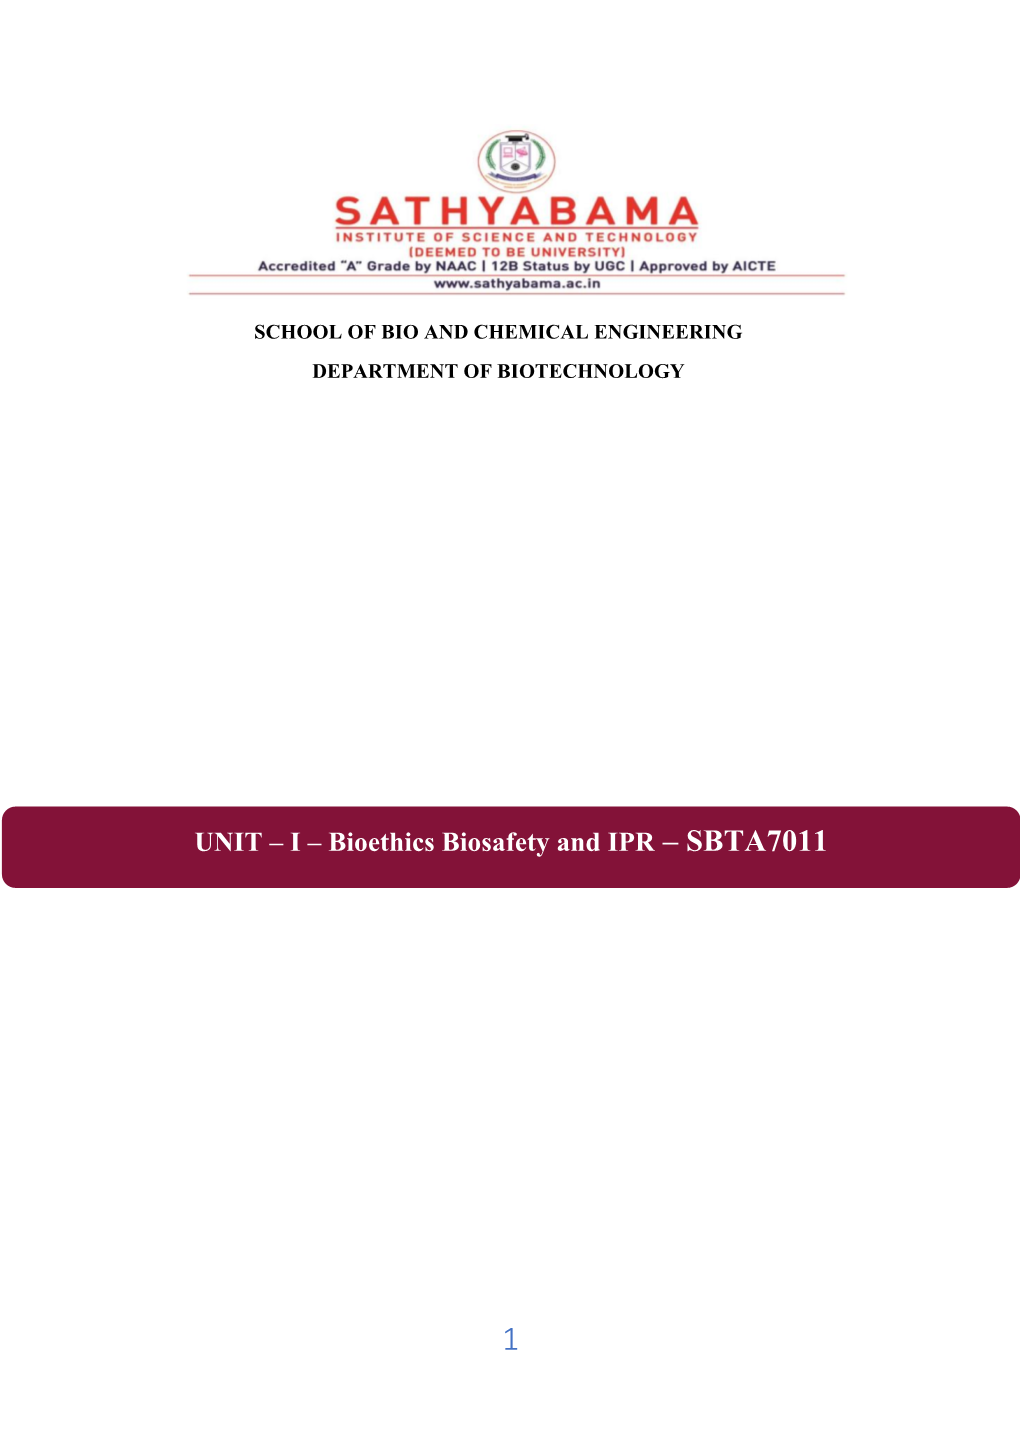 Bioethics Biosafety and IPR – SBTA7011